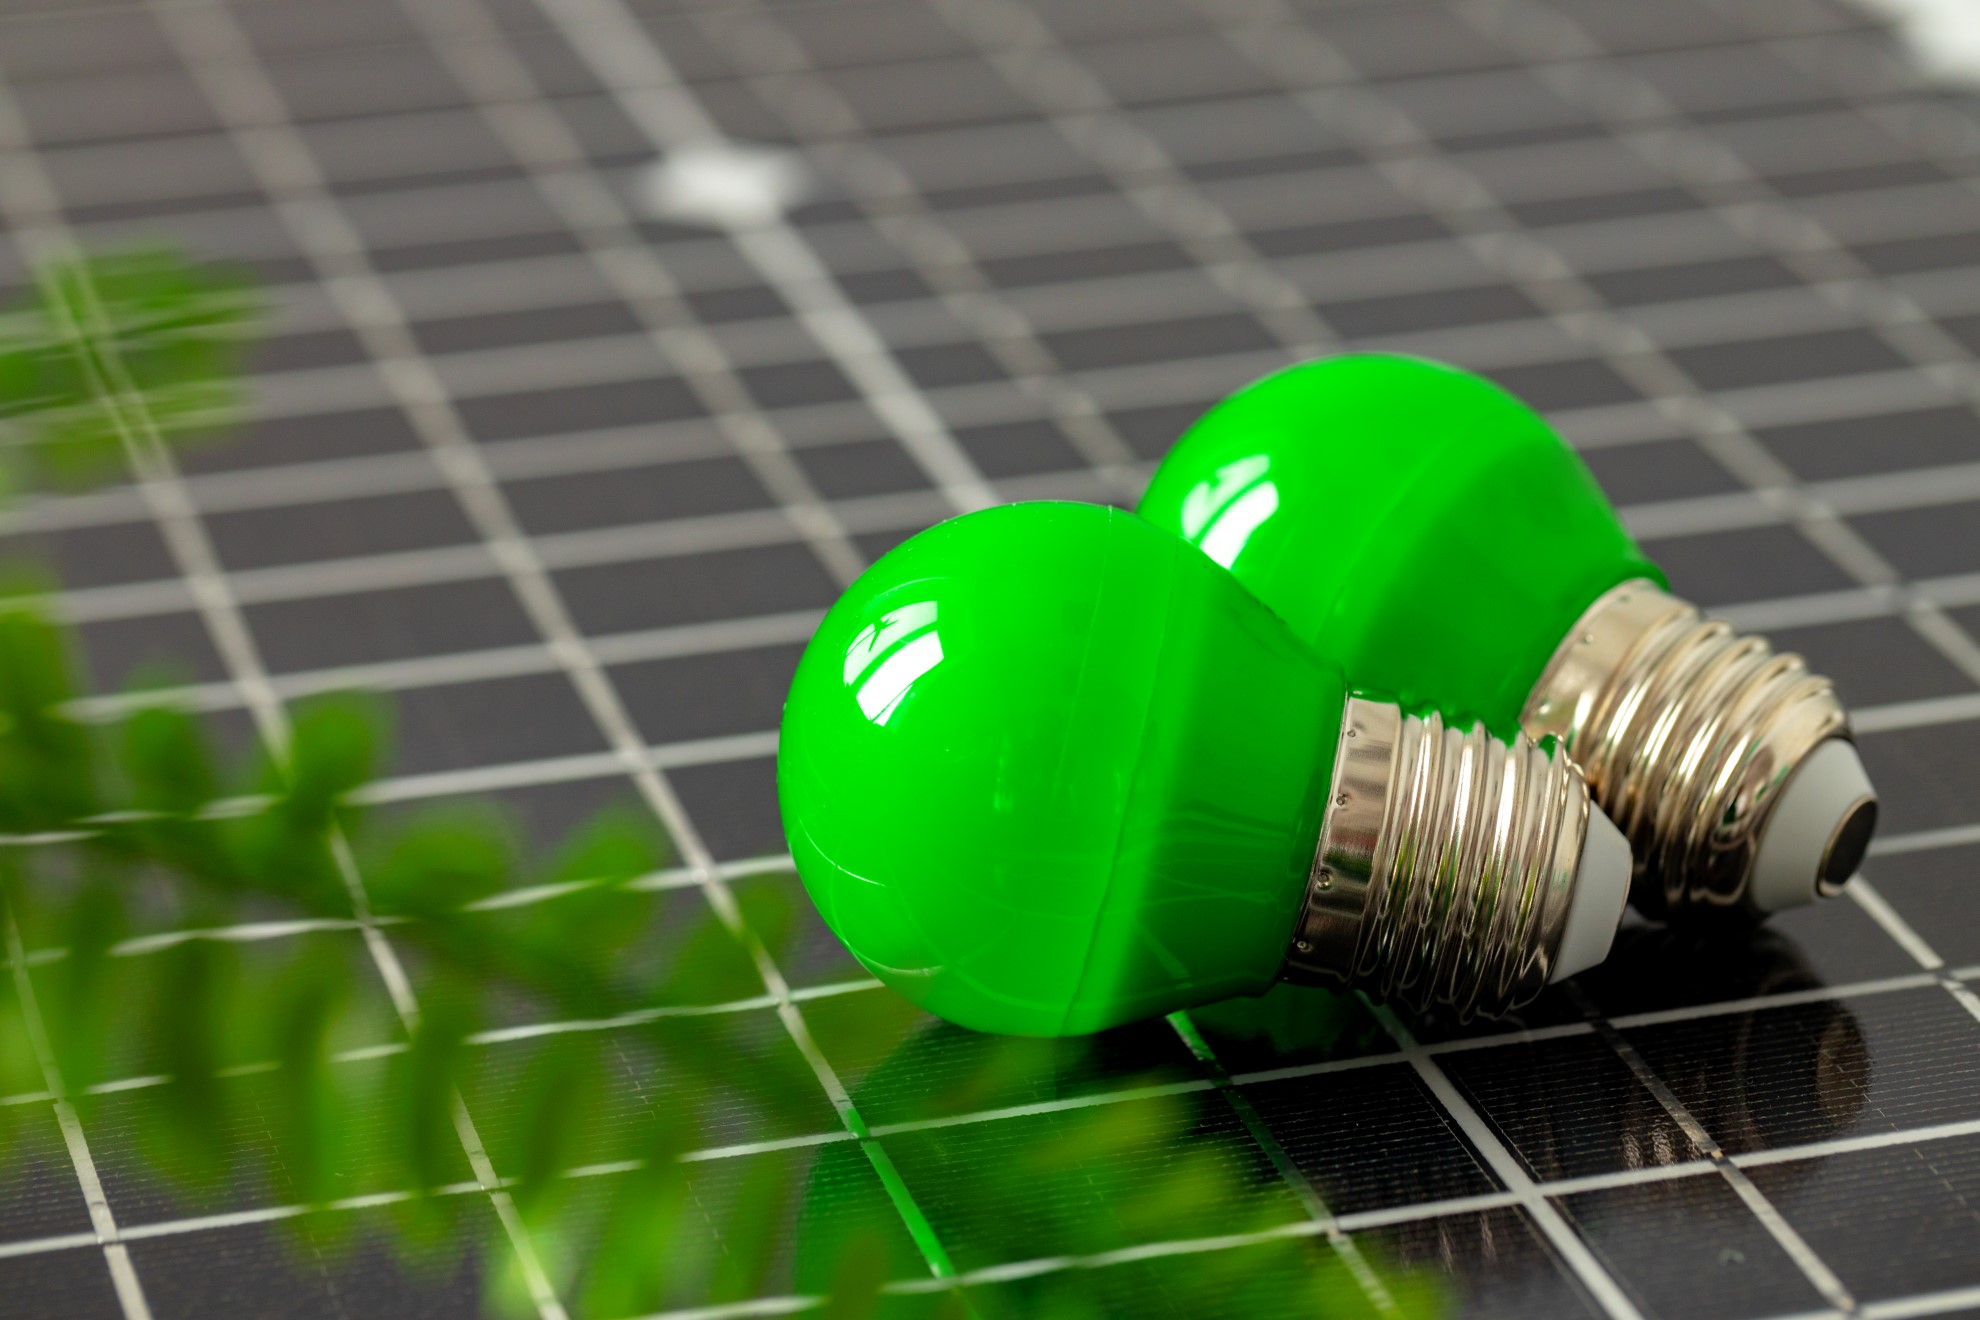 solar-energy-panel-and-light-bulb-green-energy-2021-09-03-16-02-09-utc